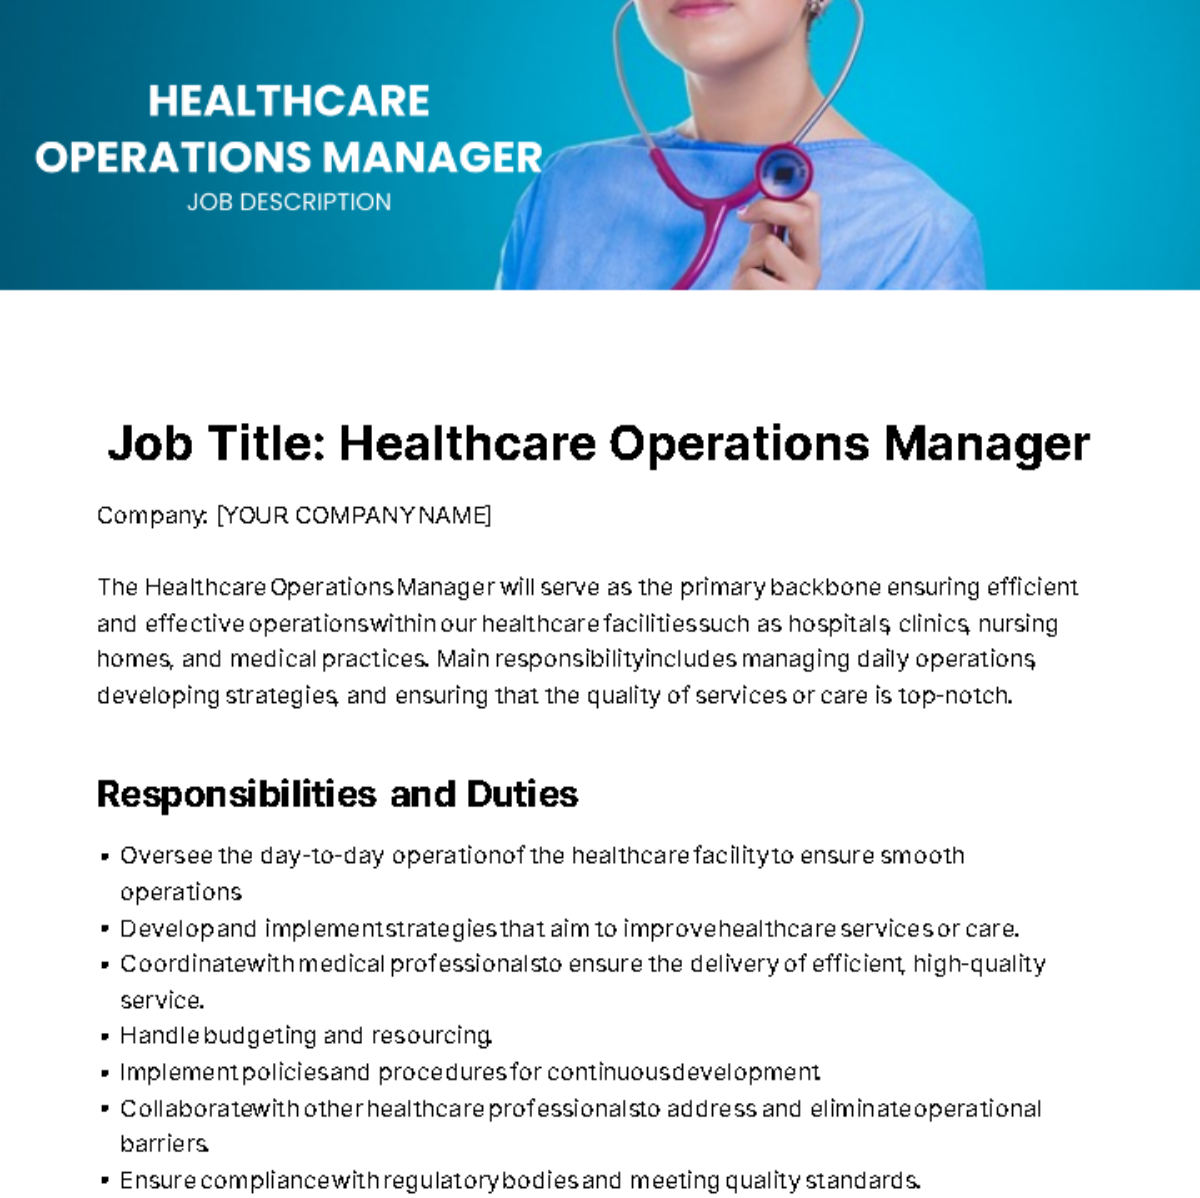 Healthcare Operations Manager Job Description Template